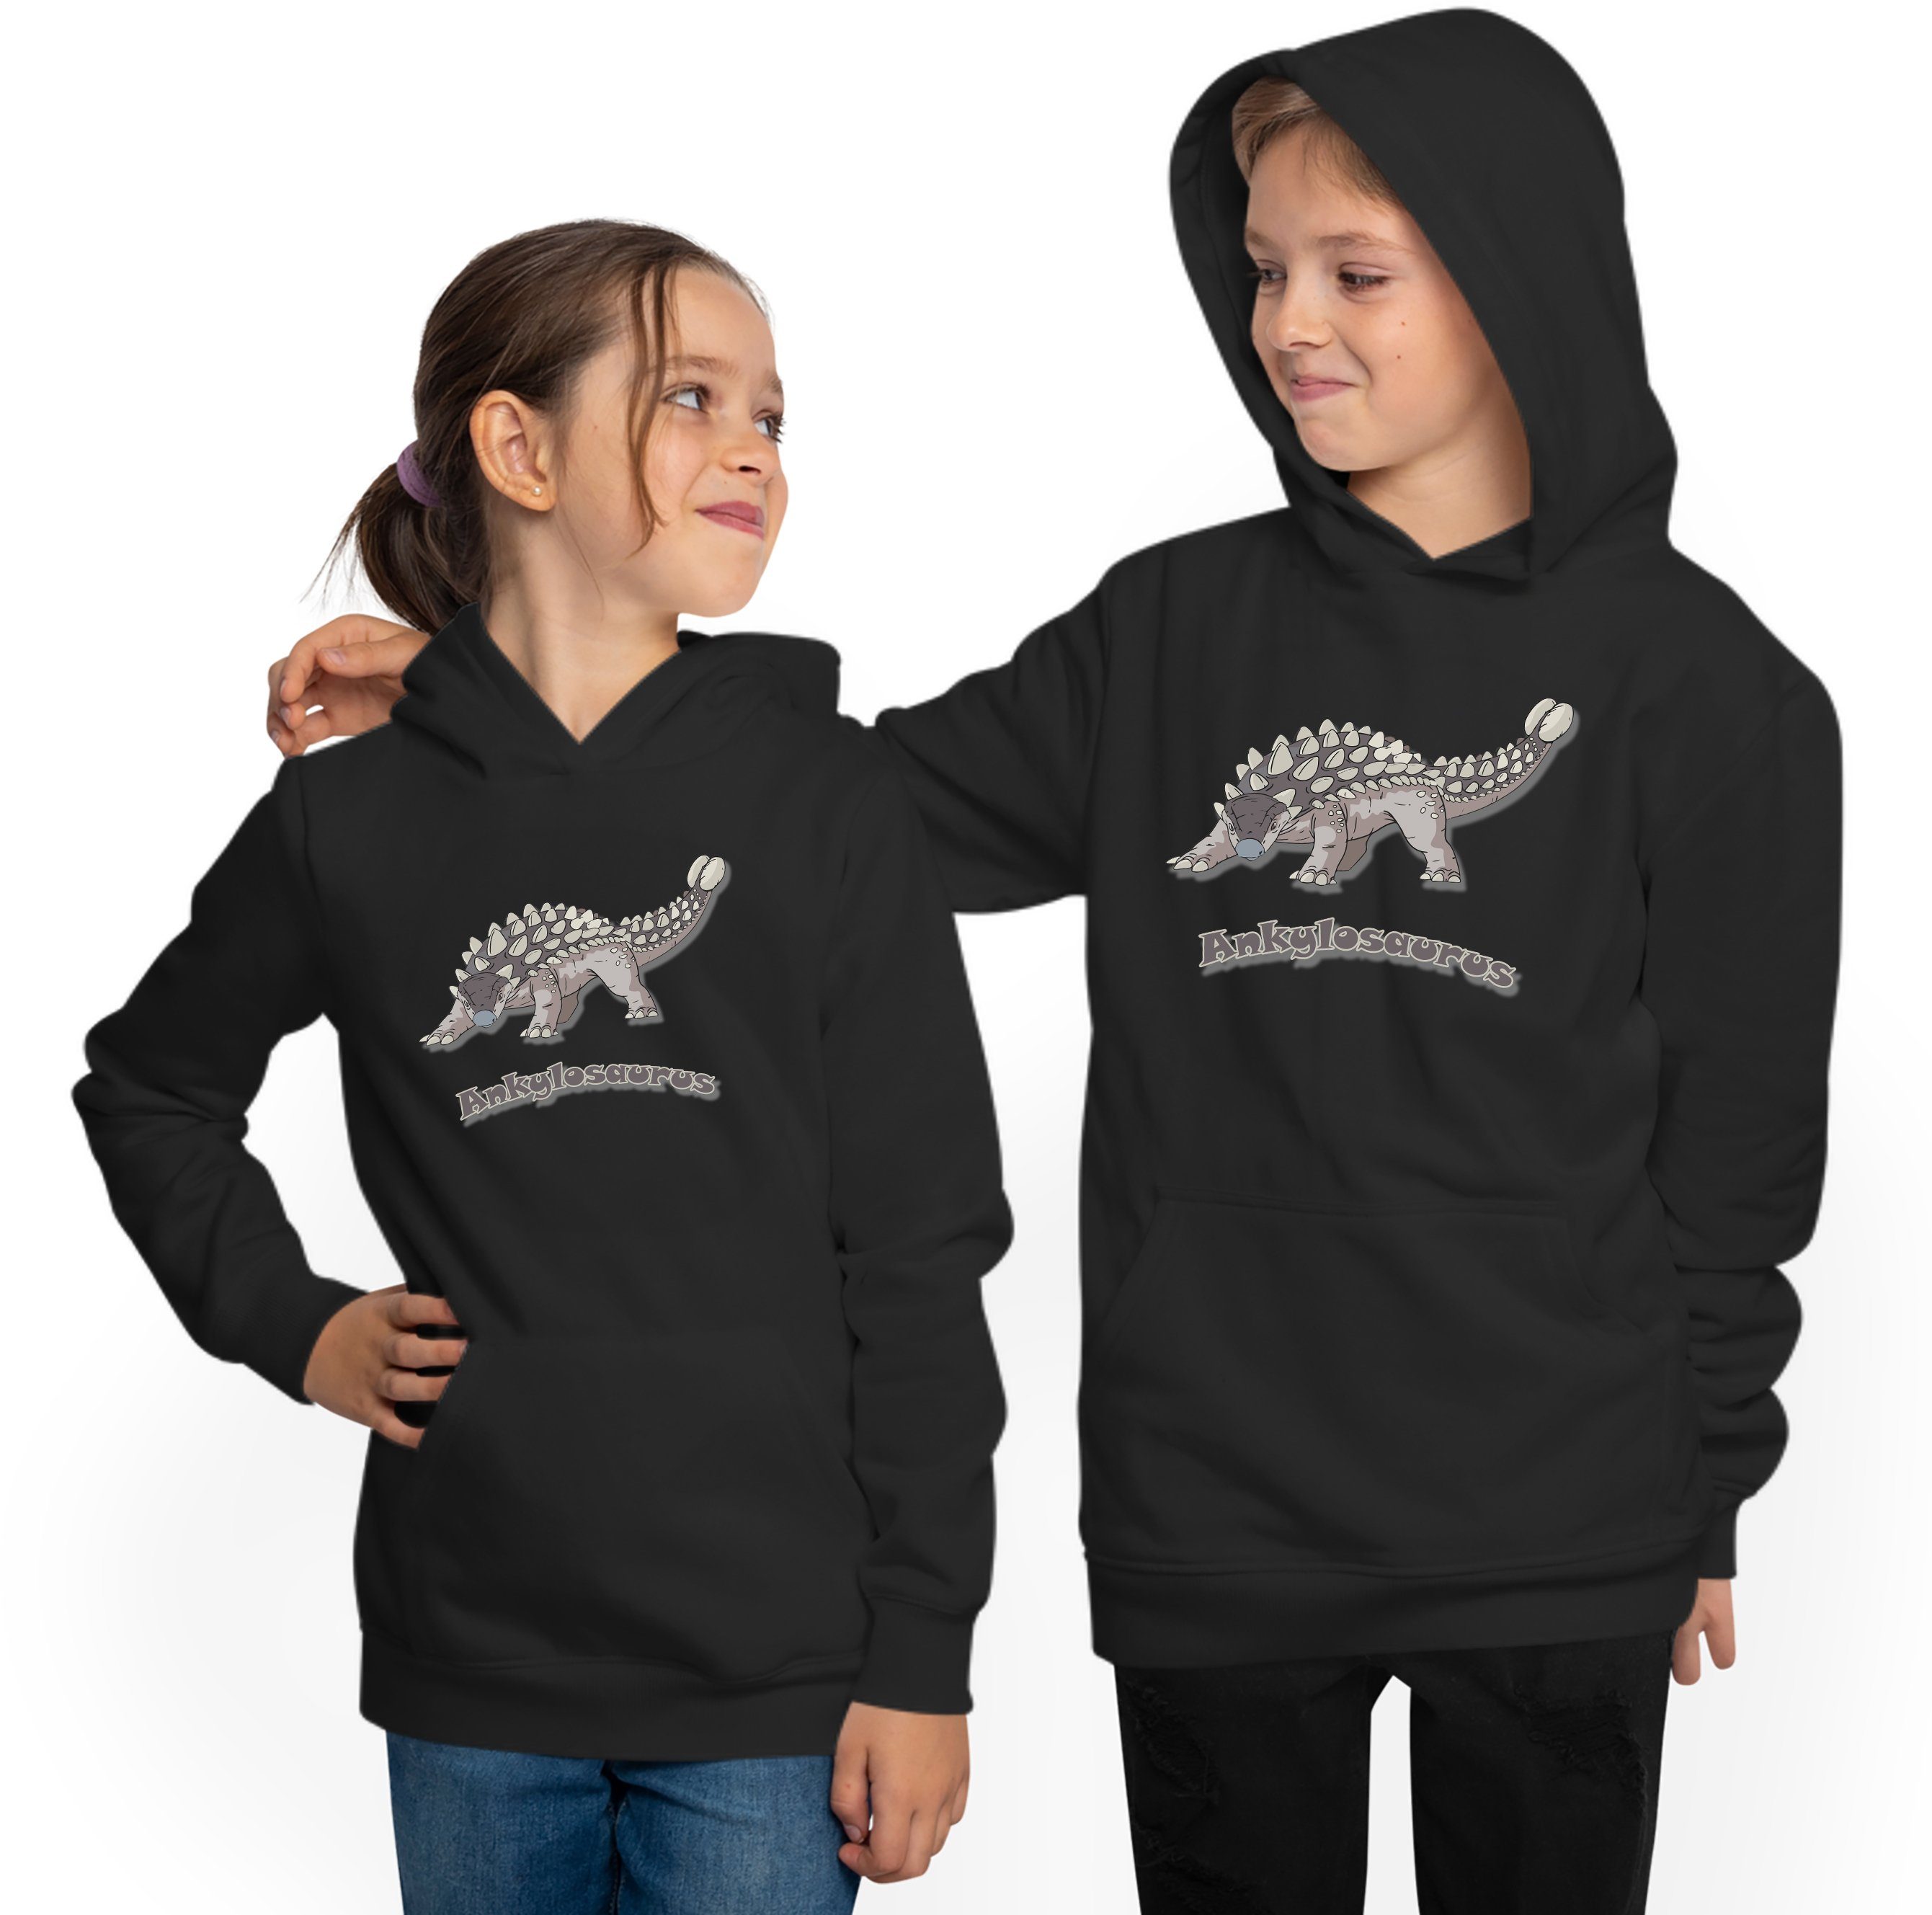 MyDesign24 Hoodie Mit Aufdruck, Kapuzensweater Ankylosaurus mit Kinder - Sweatshirt Kapuzen i63